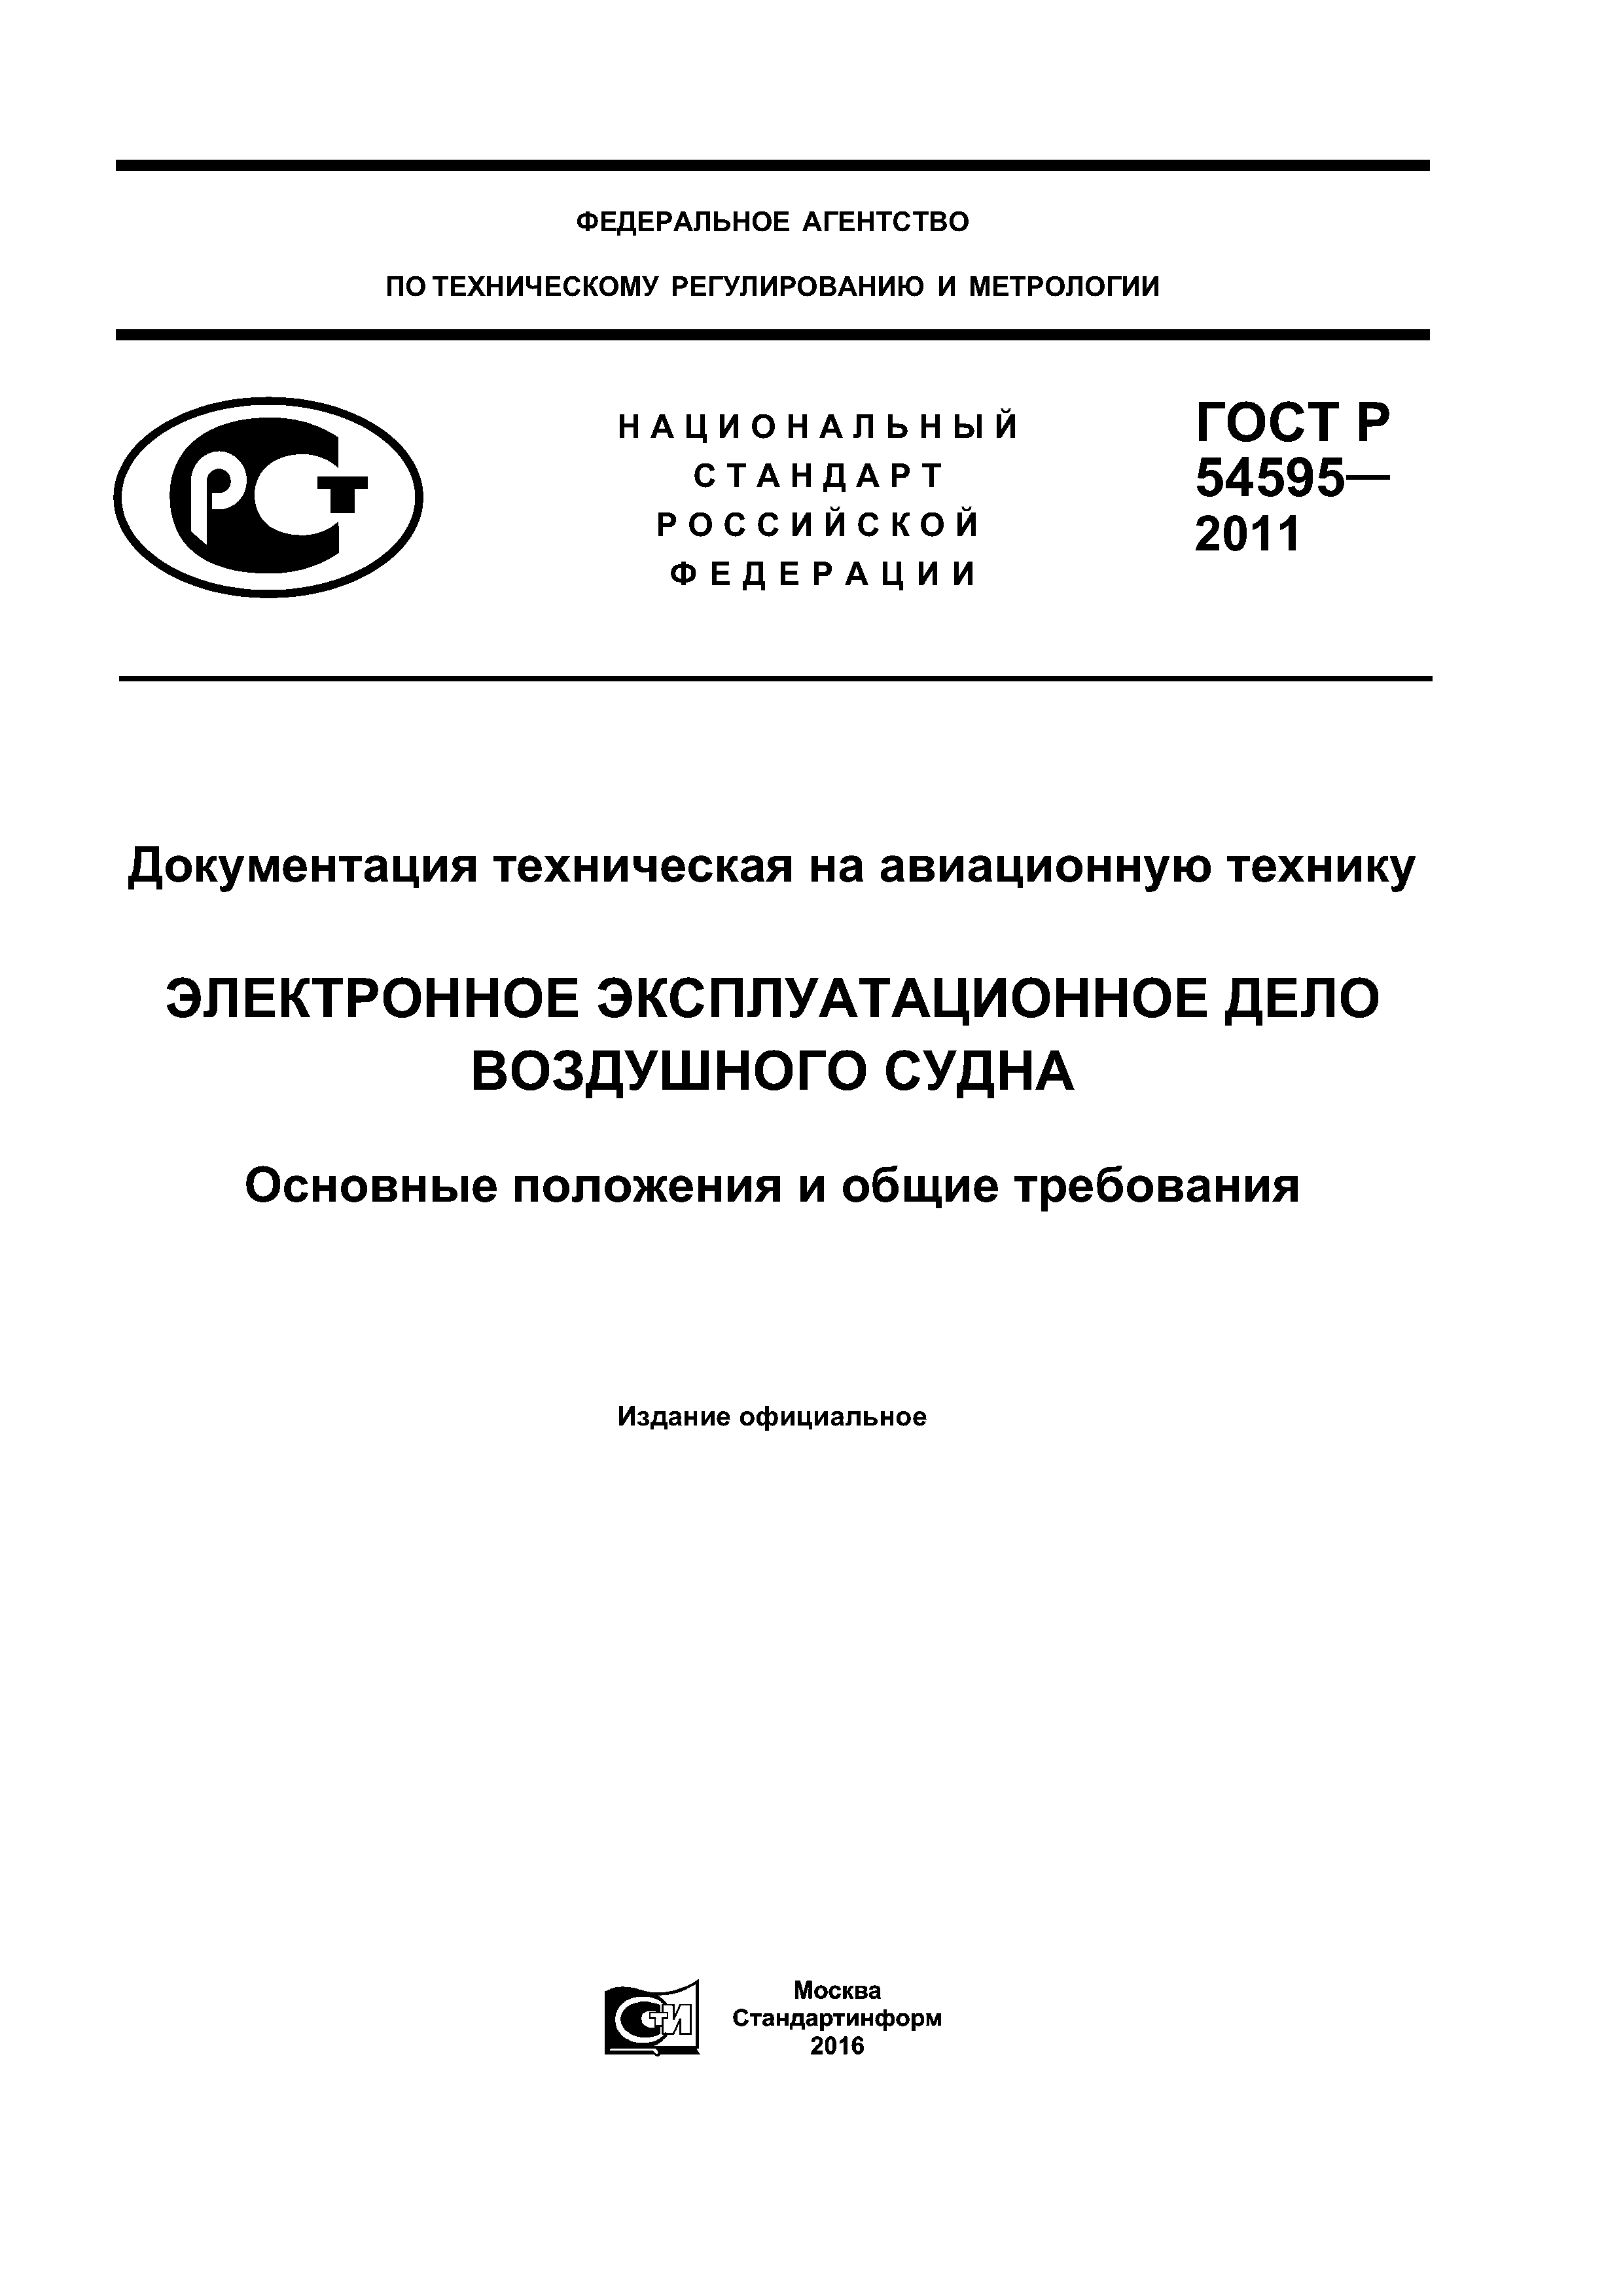 ГОСТ Р 54595-2011